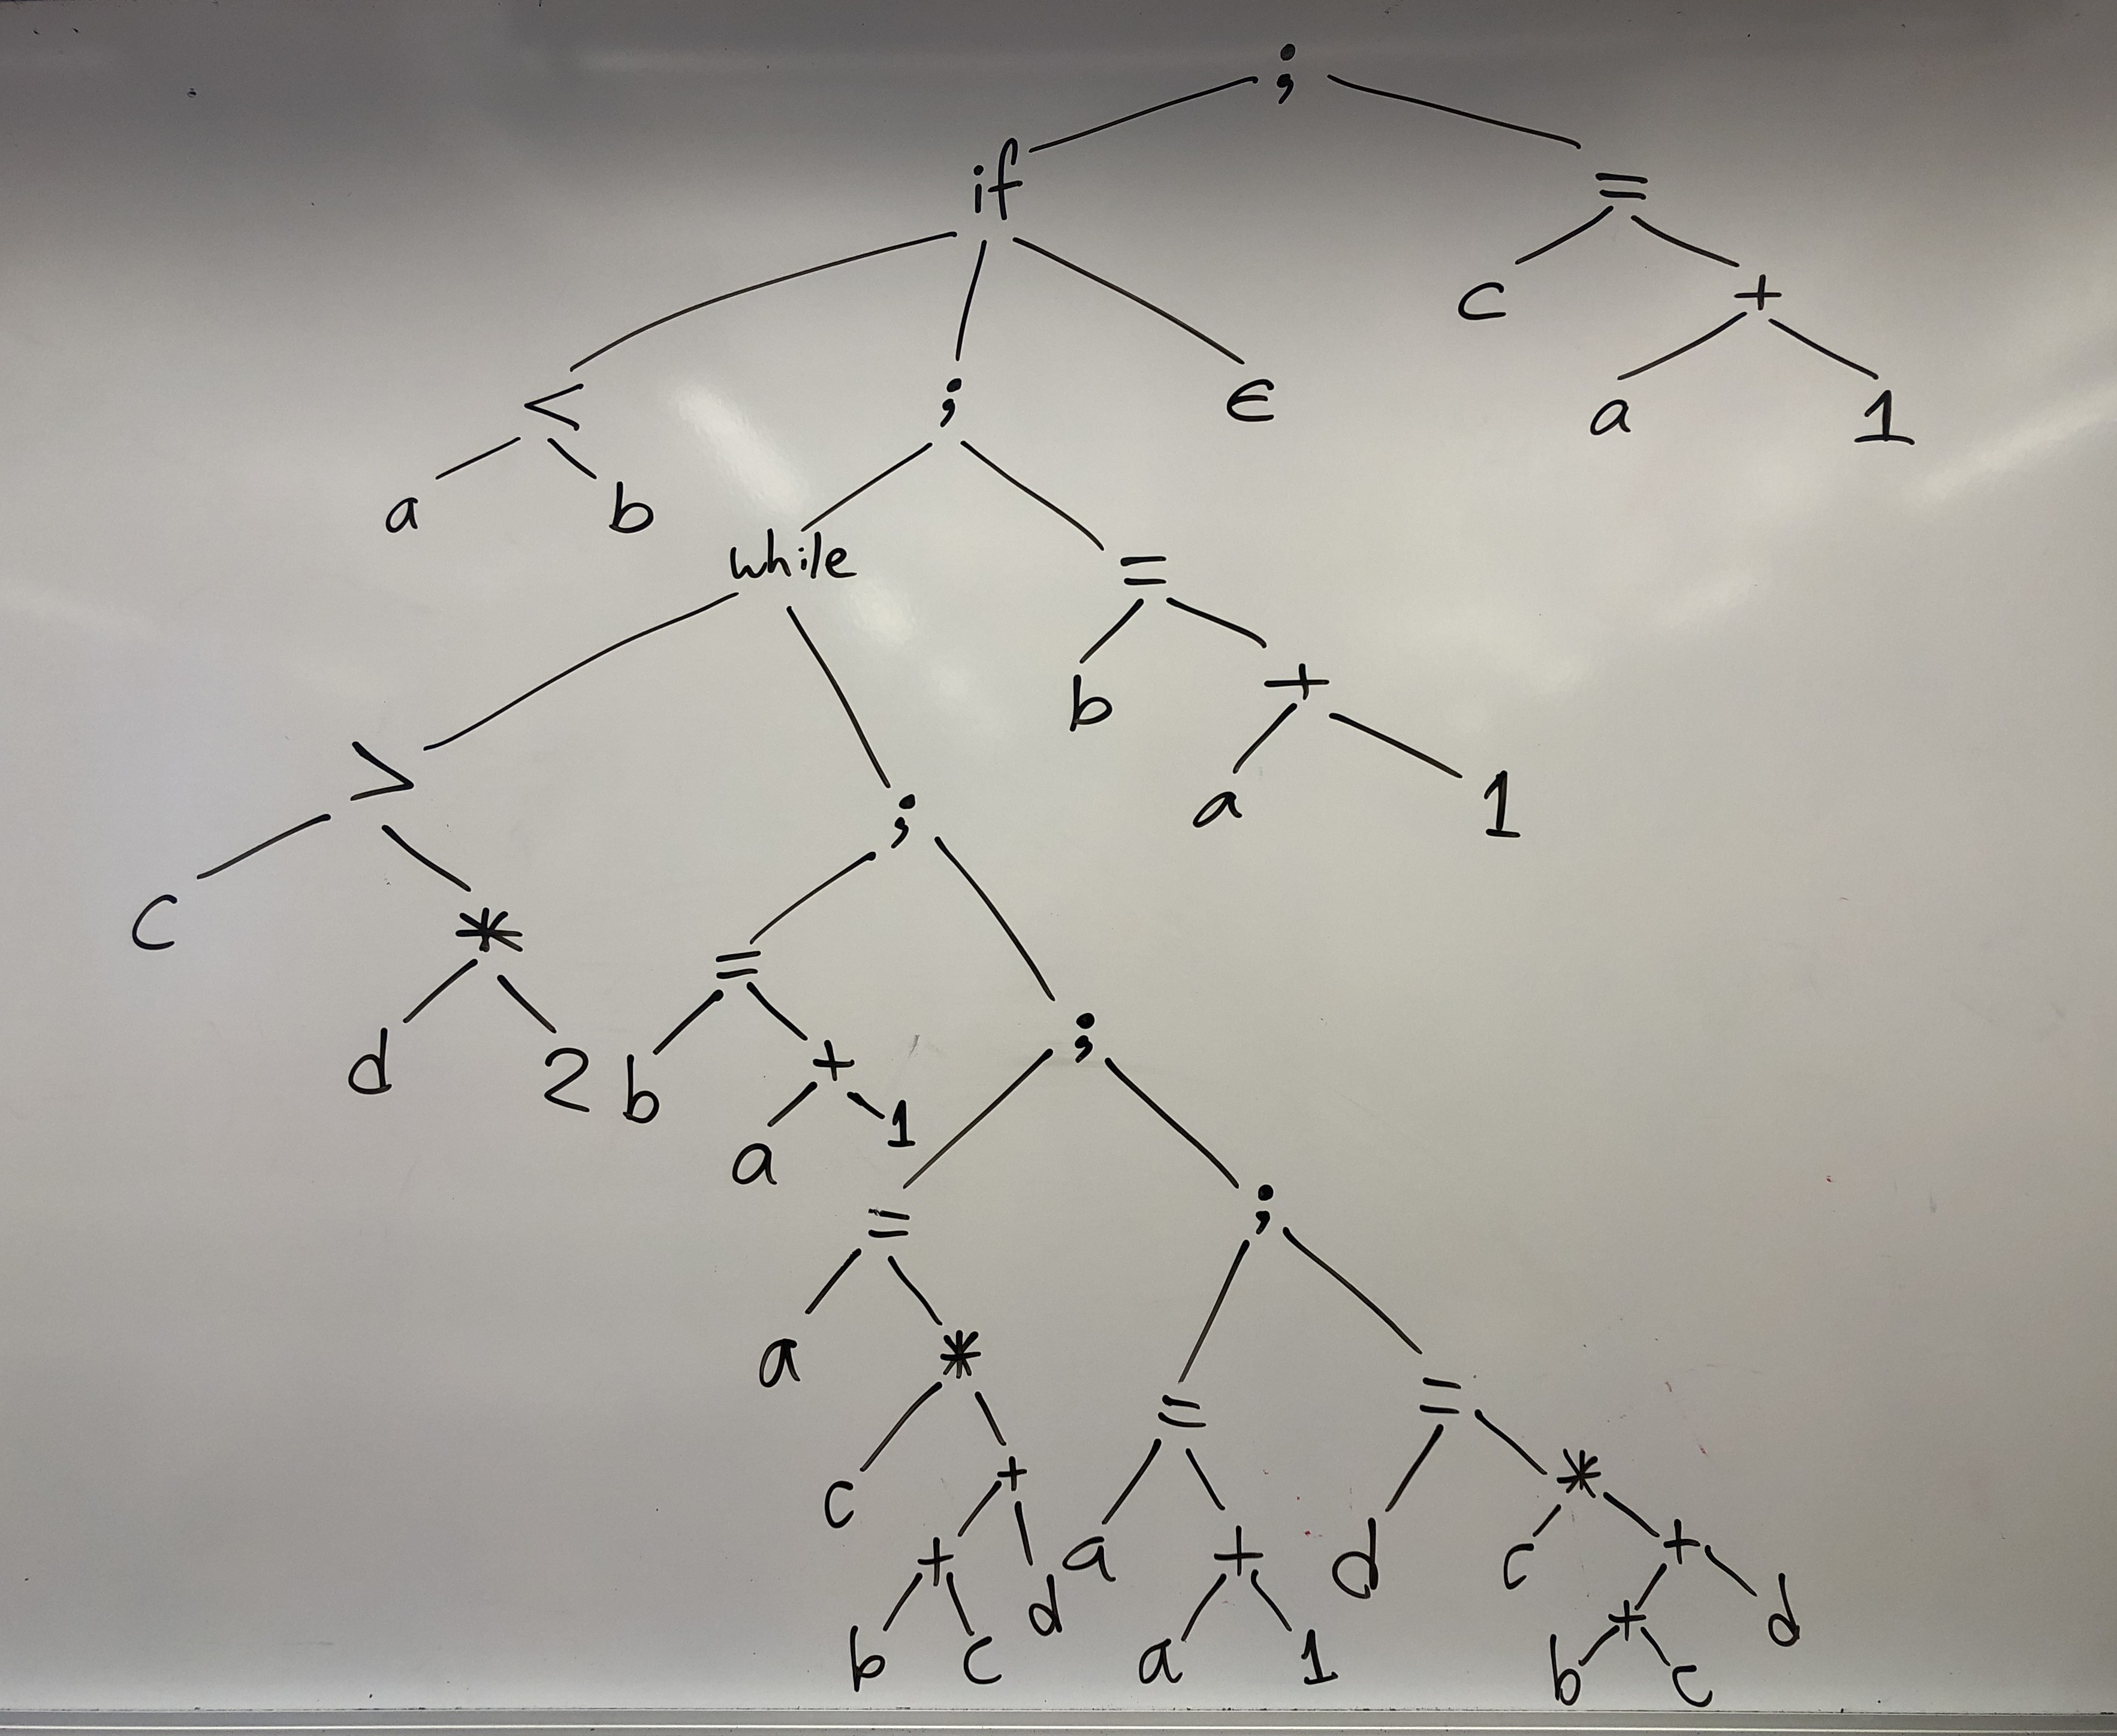 A syntax tree